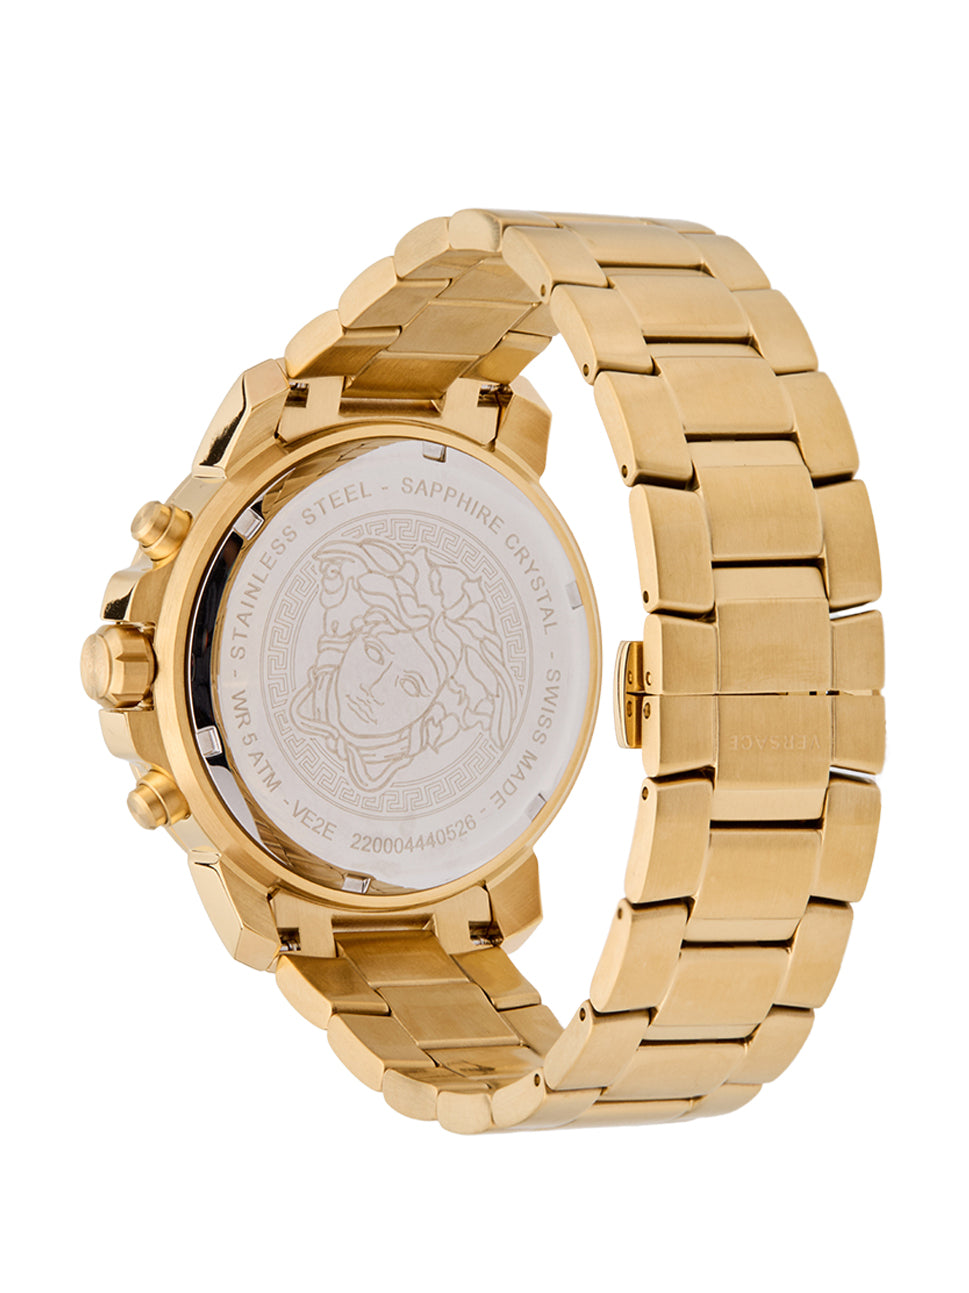 Versace Men's Chrono 45 Watch Black/Gold 45mm VE2E00921